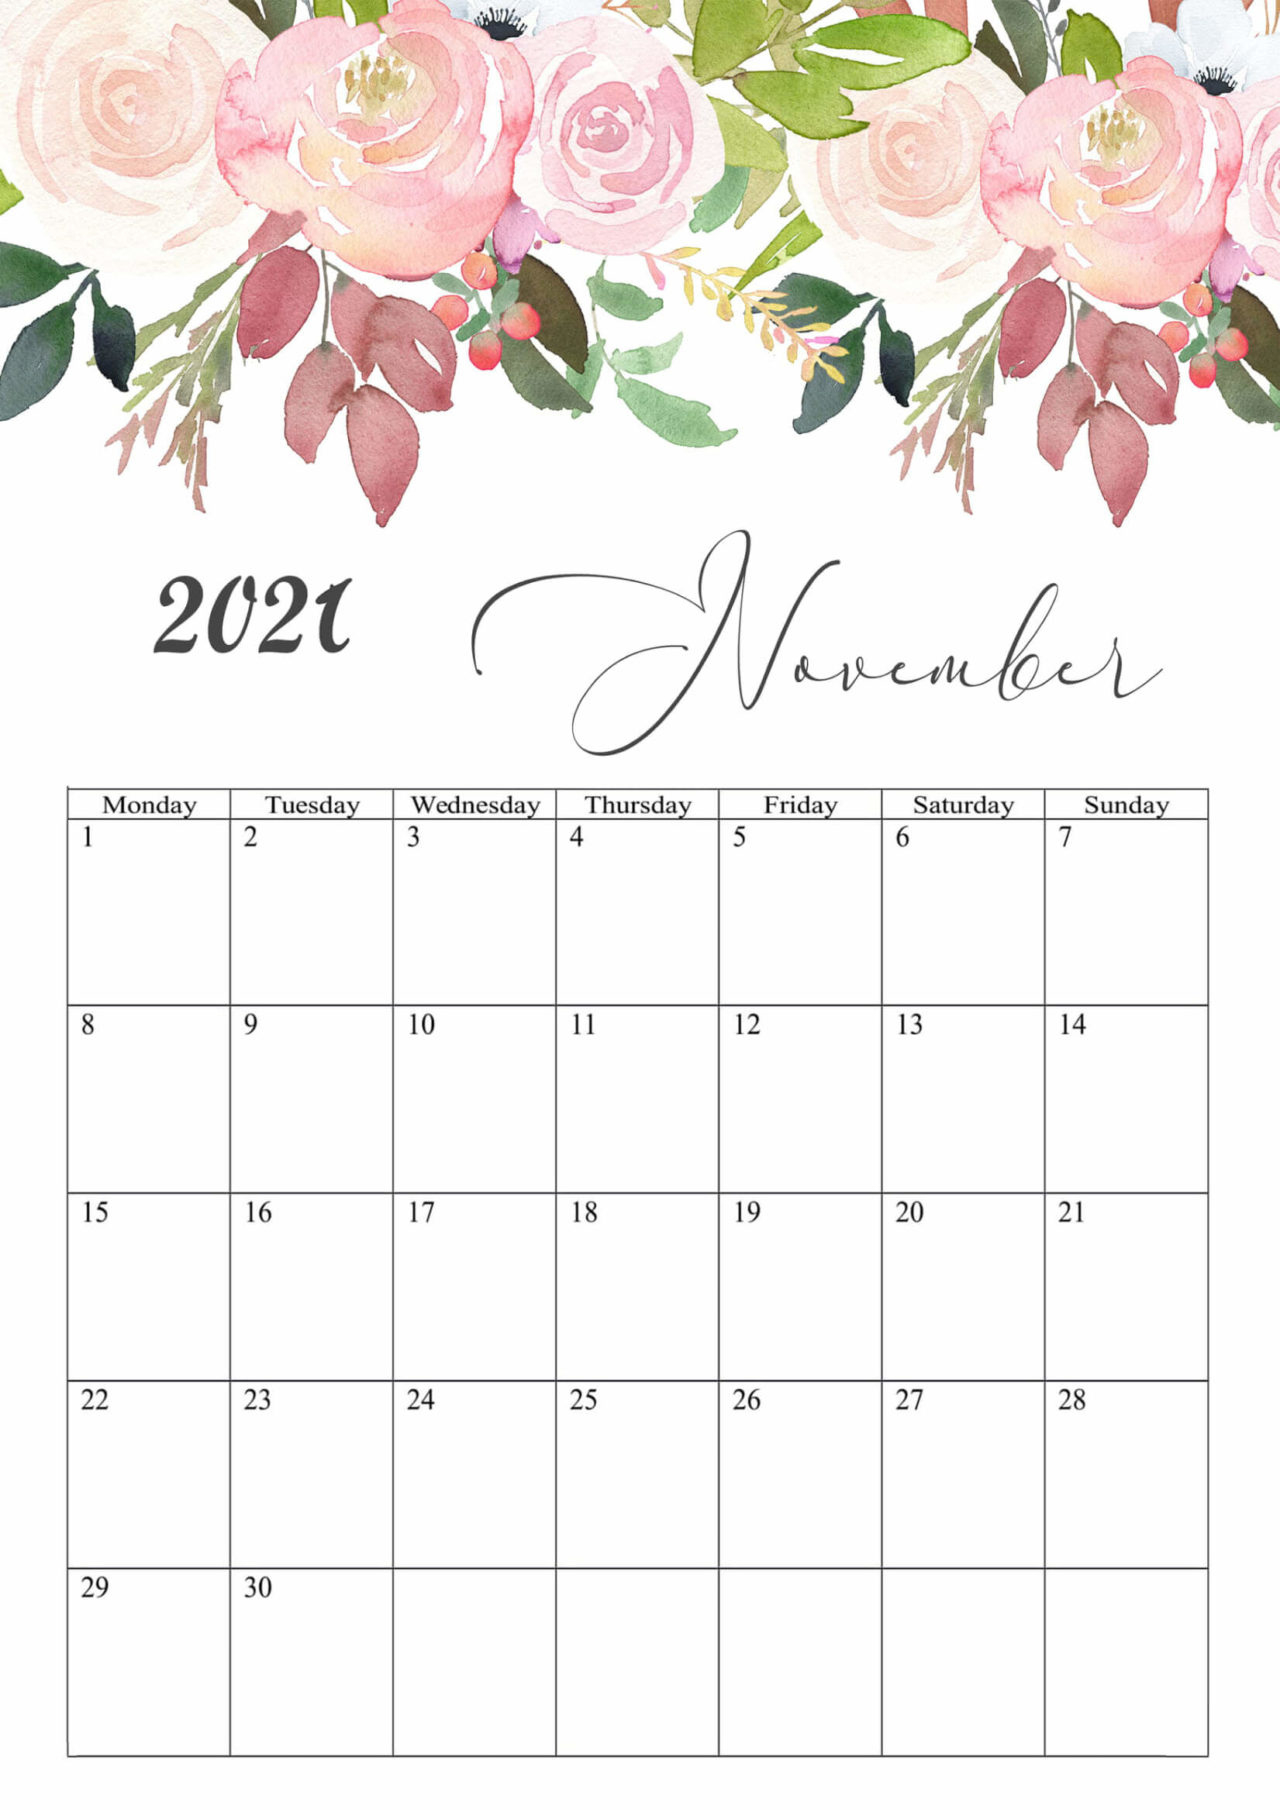 Floral November 2021 Calendar Cute - Latest Calendar Cute November 2021 Calendar